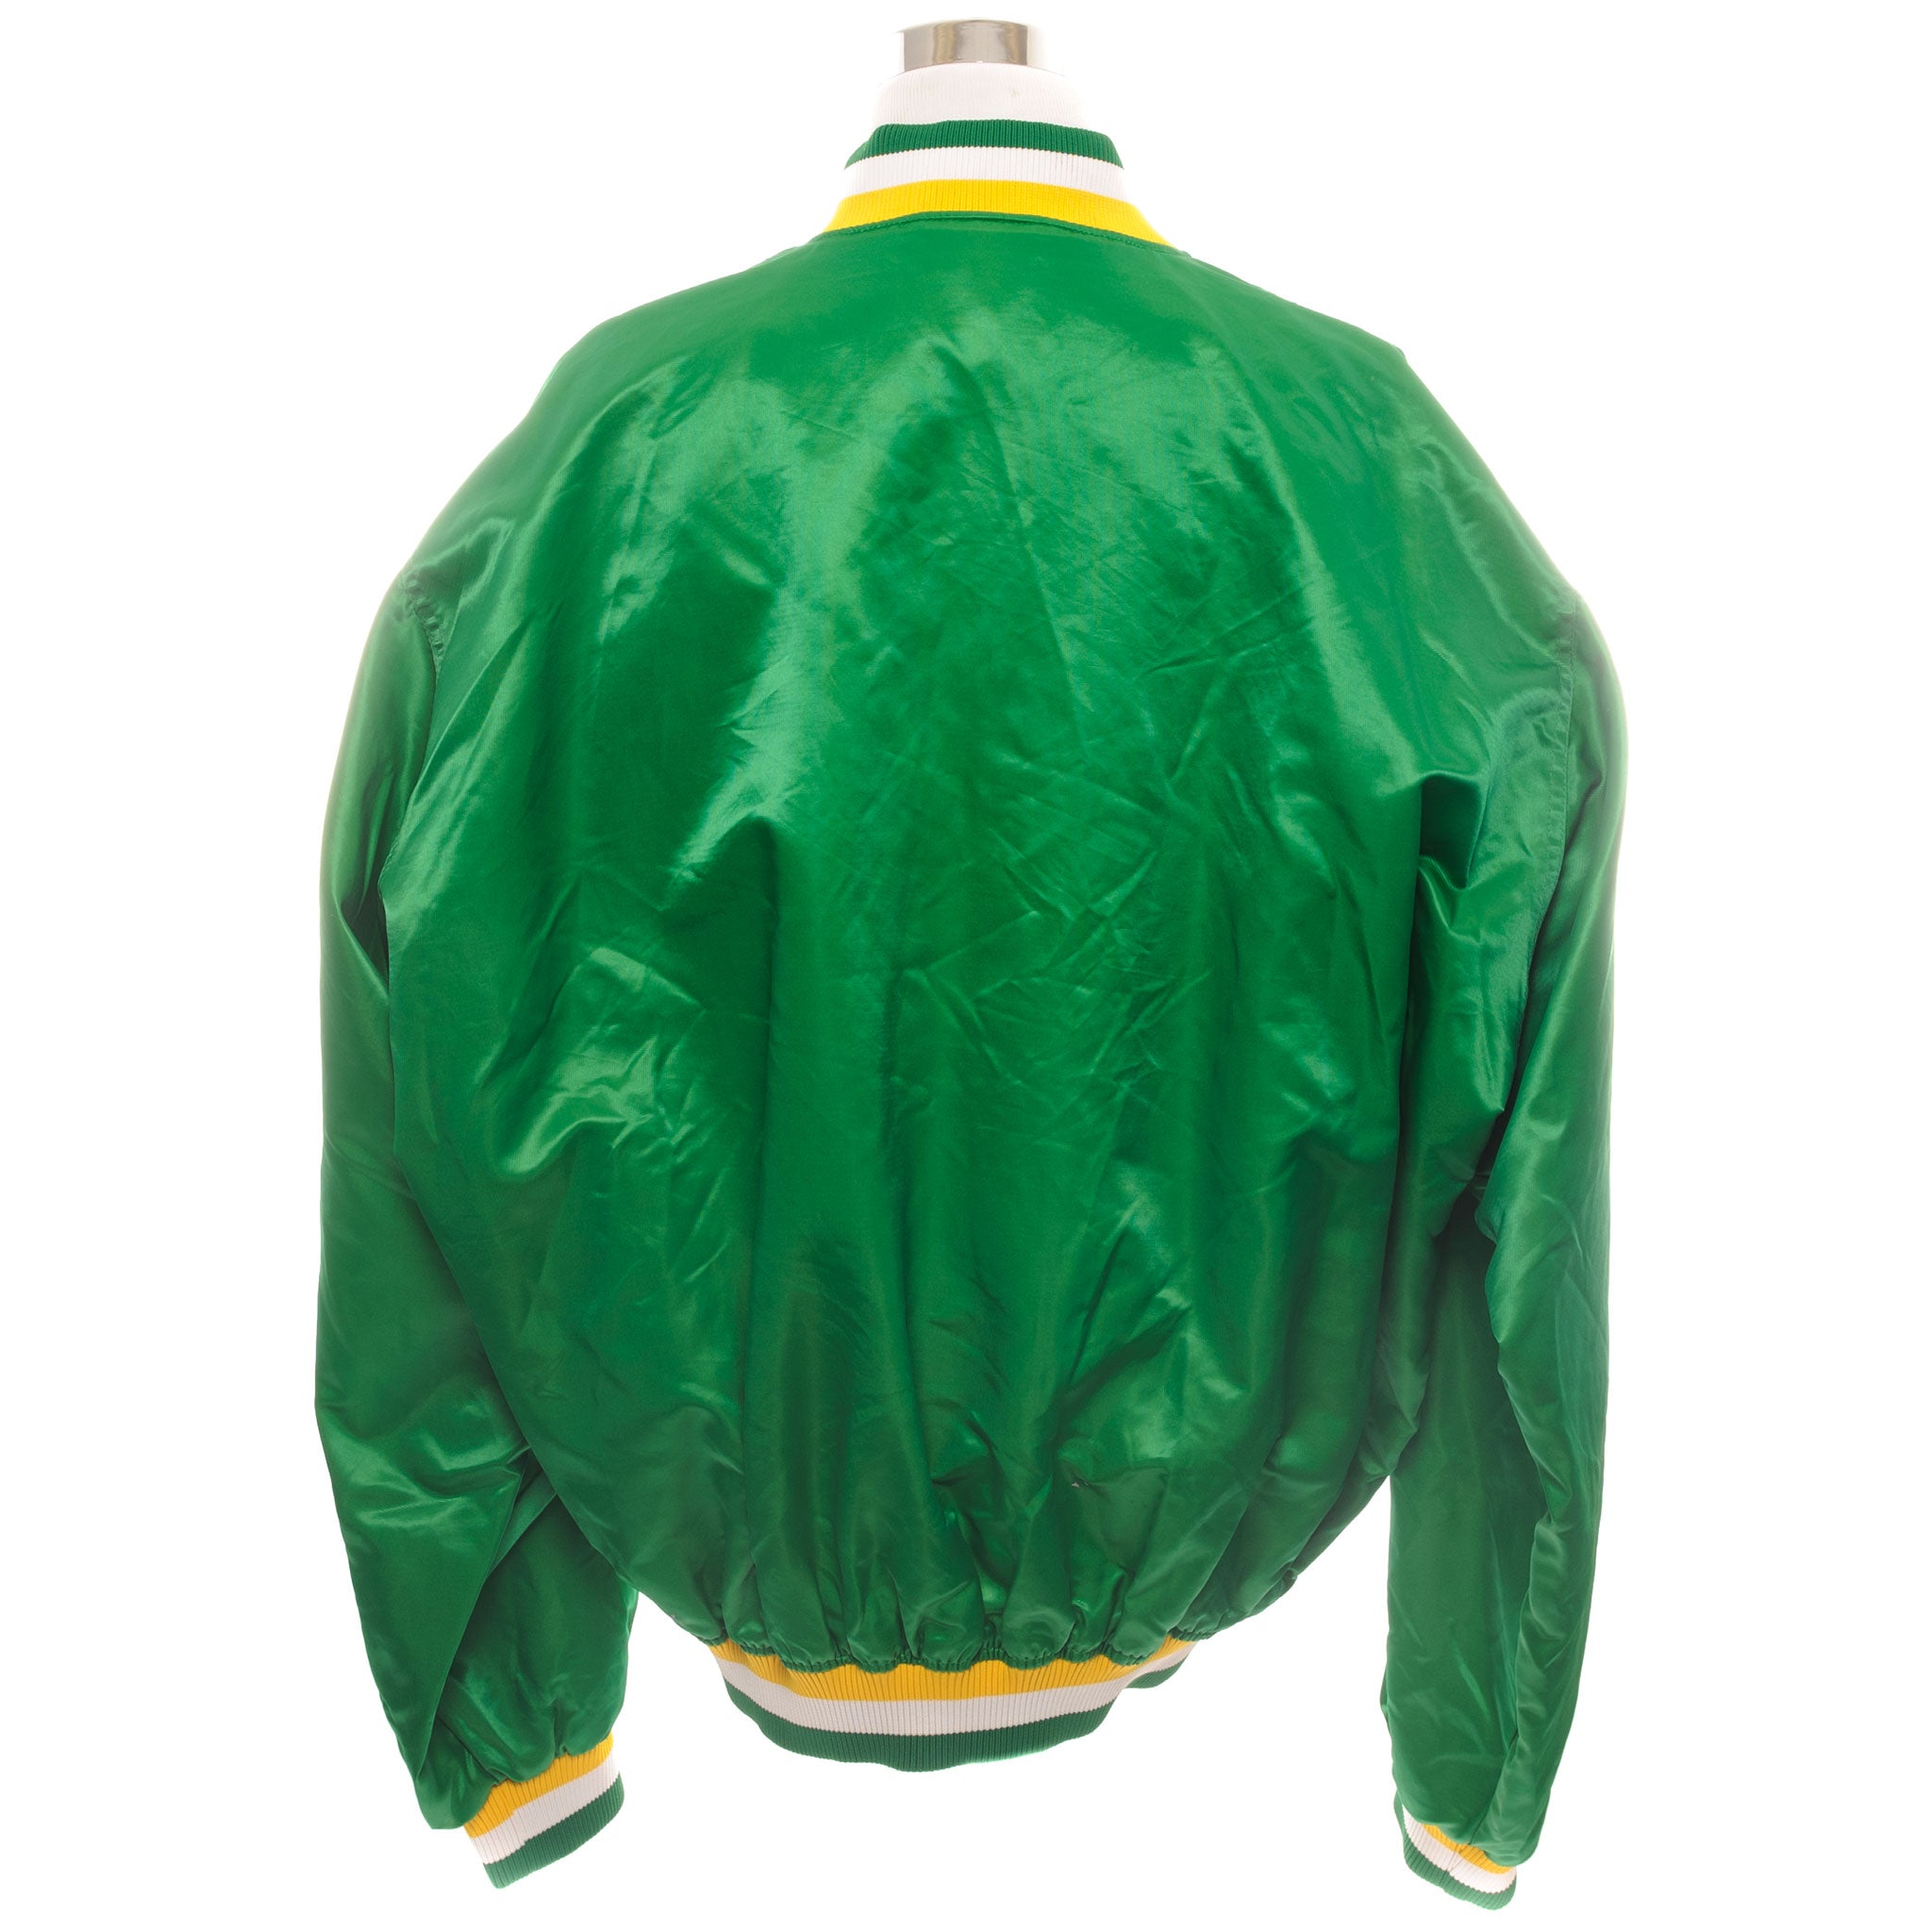 Vtg NBA Boston Celtics Basketball Leather Jacket